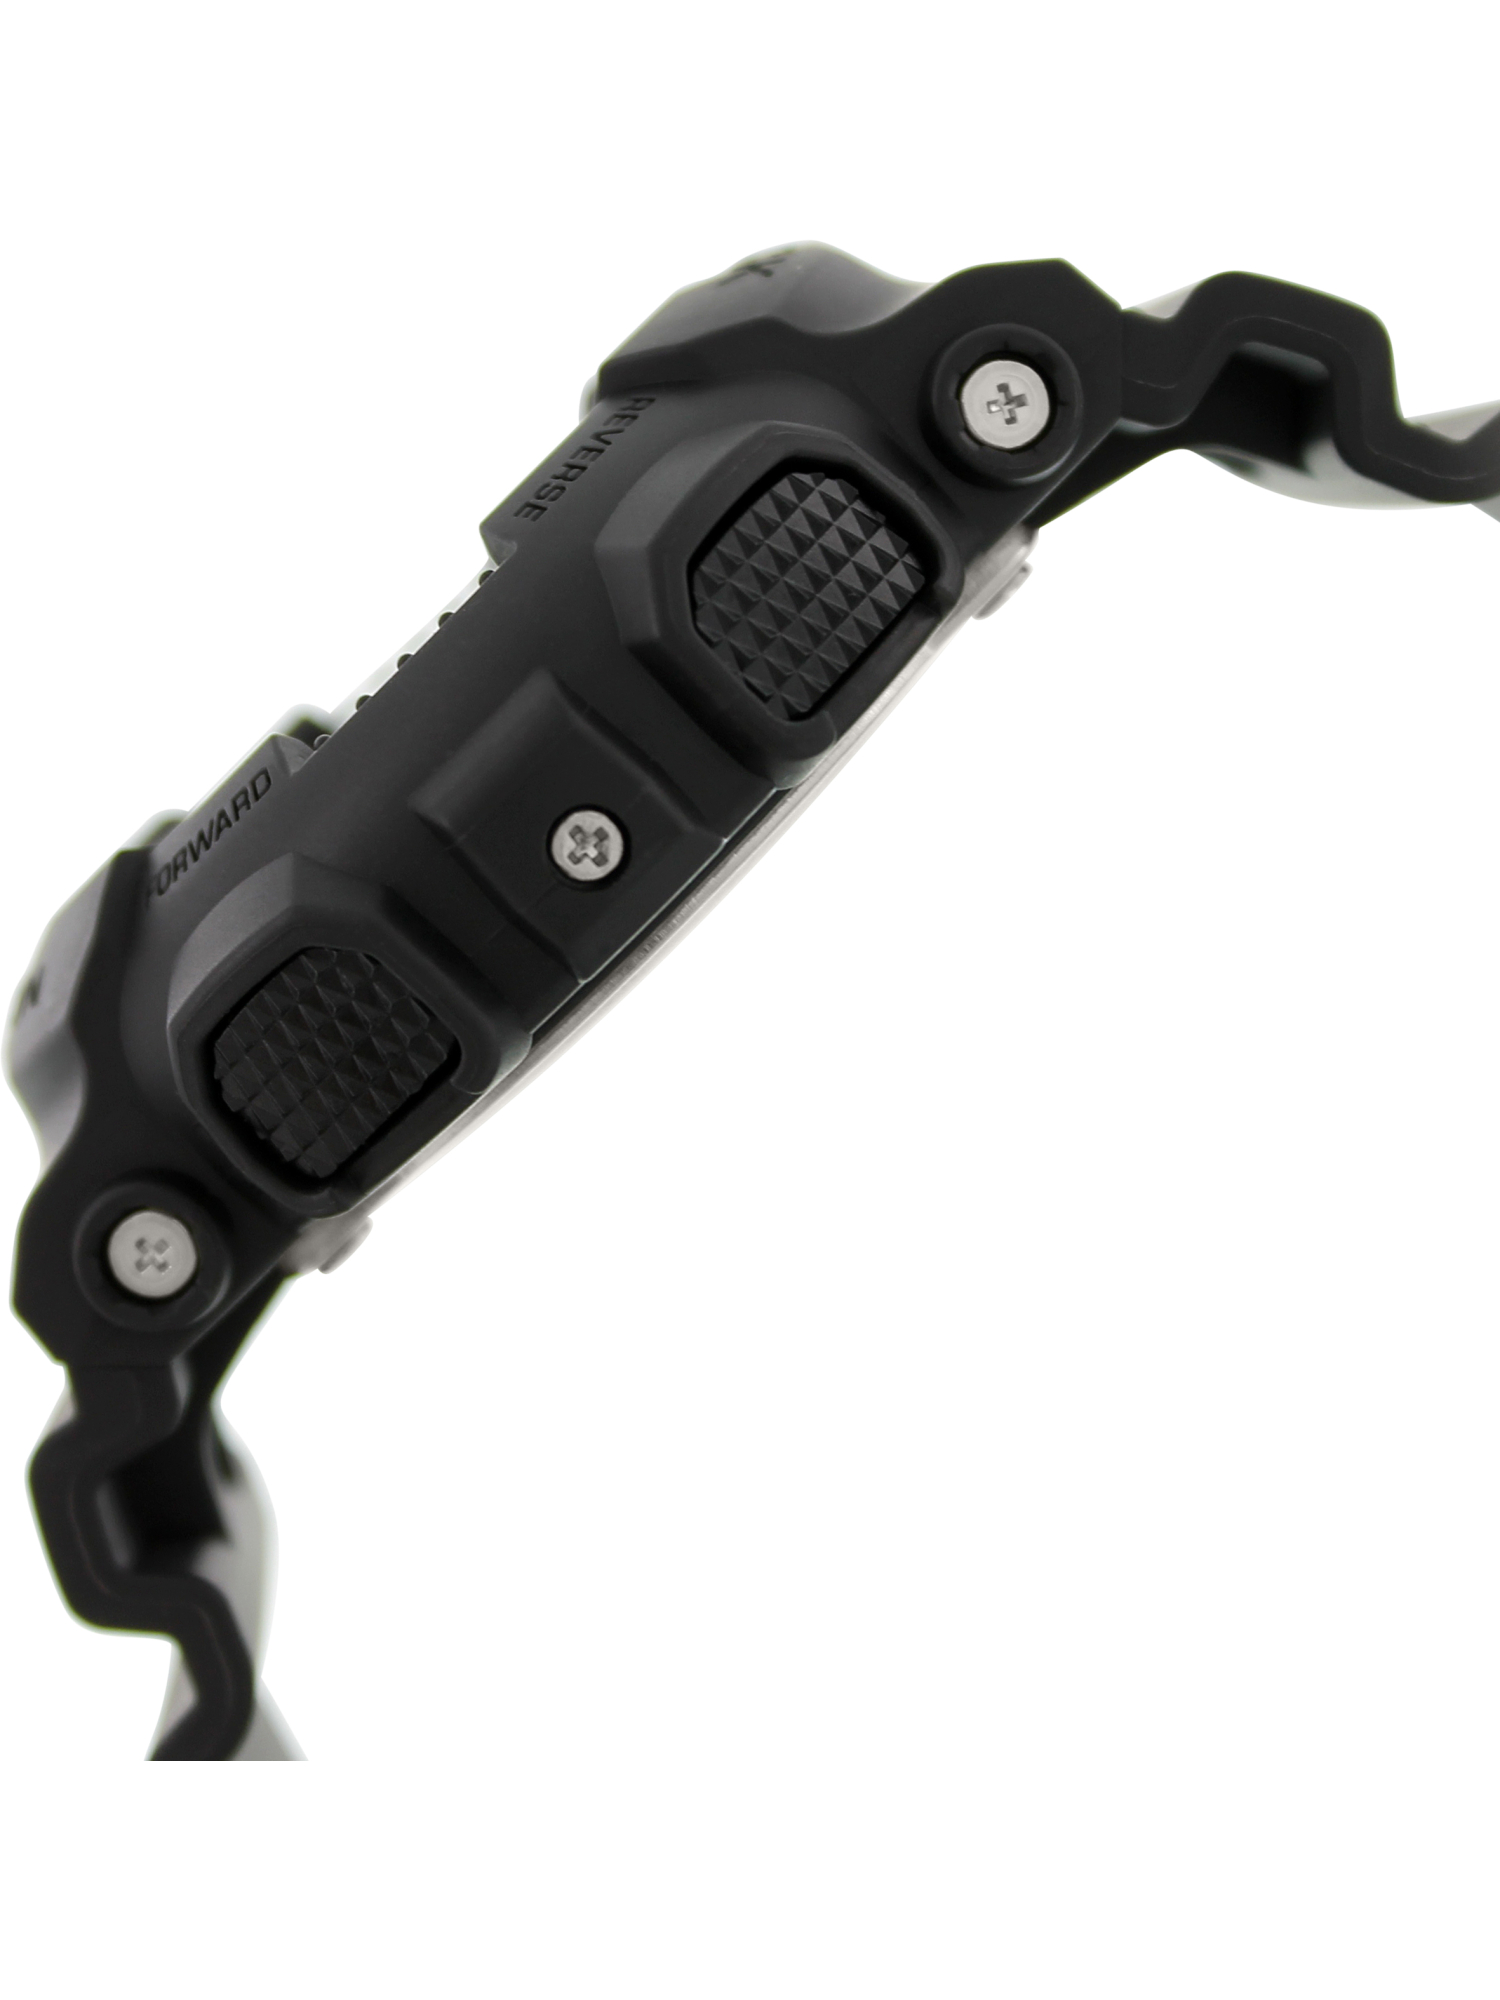 Casio Men's G-Shock Black Dial Watch - GA100-1A1 - image 3 of 3